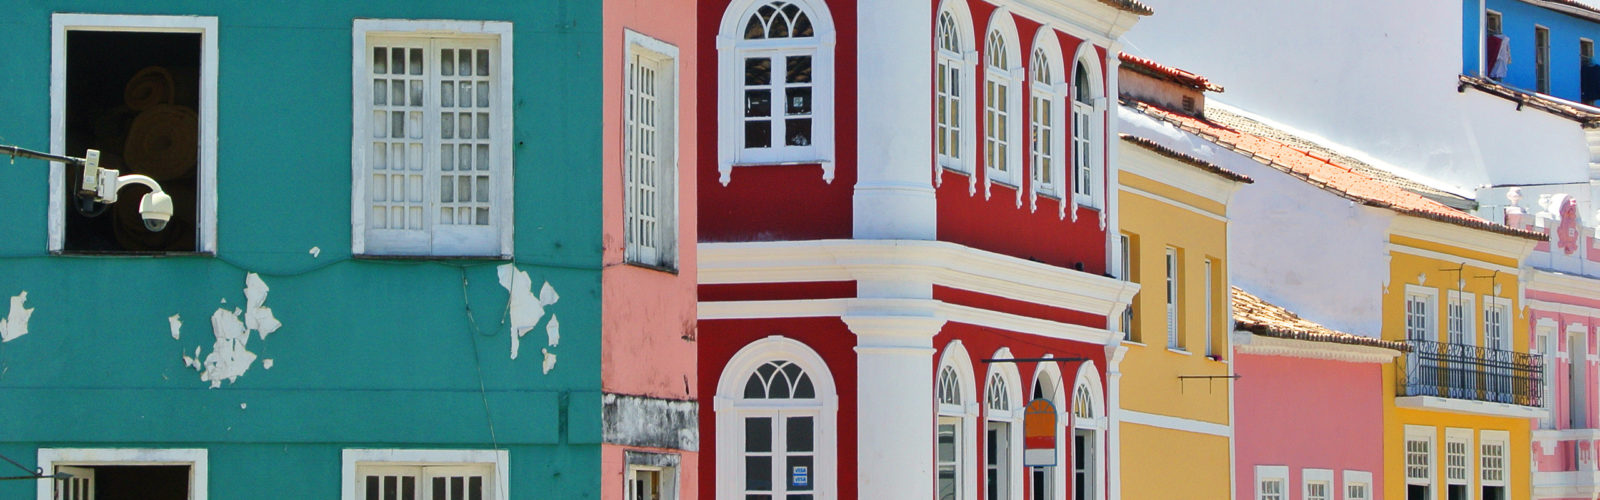 salvador-brazil-colourful-houses